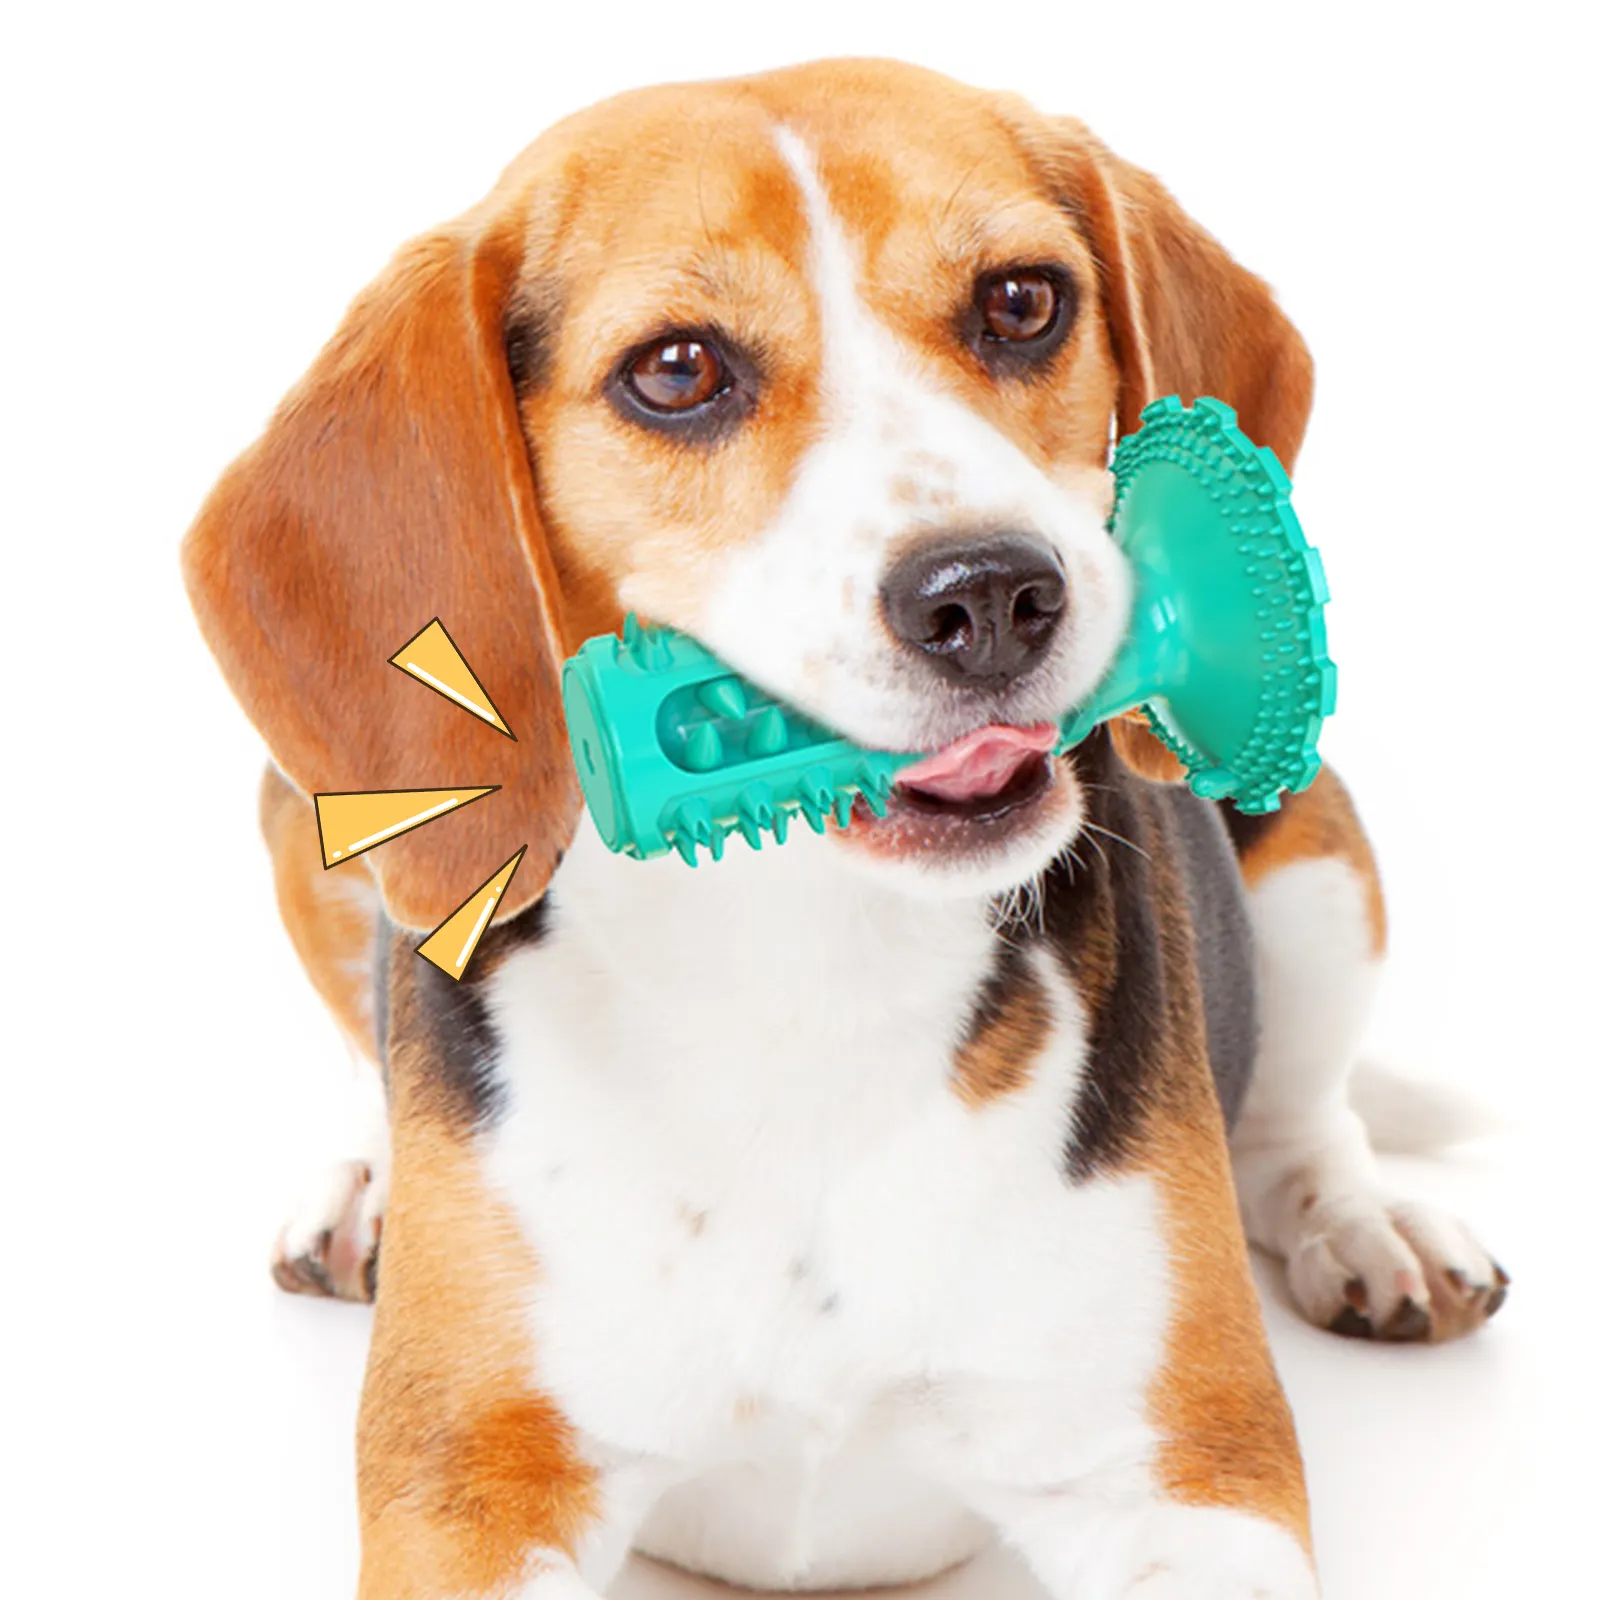 पालतू रबर टूथब्रश, काटने प्रतिरोधी कुत्ते खिलौना पालतू जानवर मौखिक सफाई टूथब्रश पिल्ला दांतों के प्रशिक्षण के लिए फिक्स्ड सक्शन कप